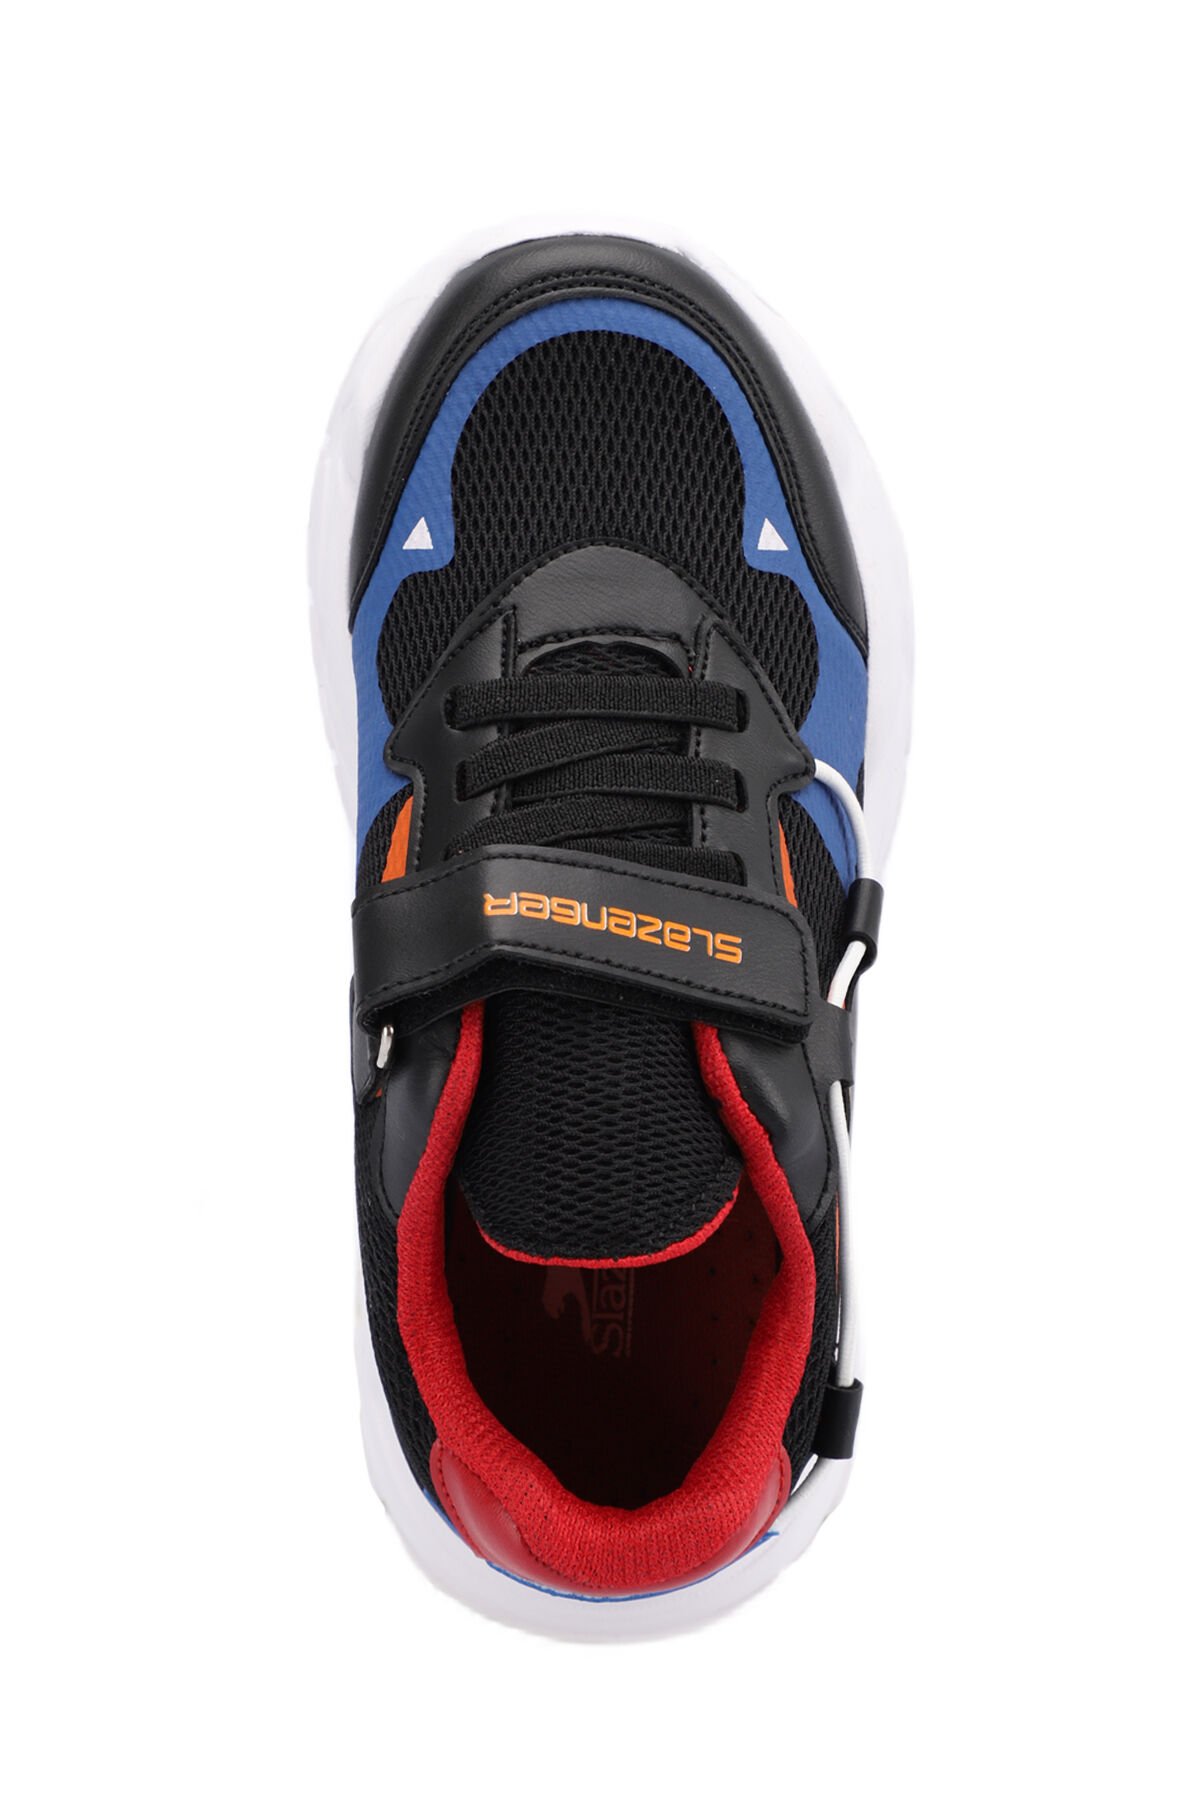 KEKOA Sneaker Erkek Çocuk Ayakkabı Siyah / Mavi - Thumbnail